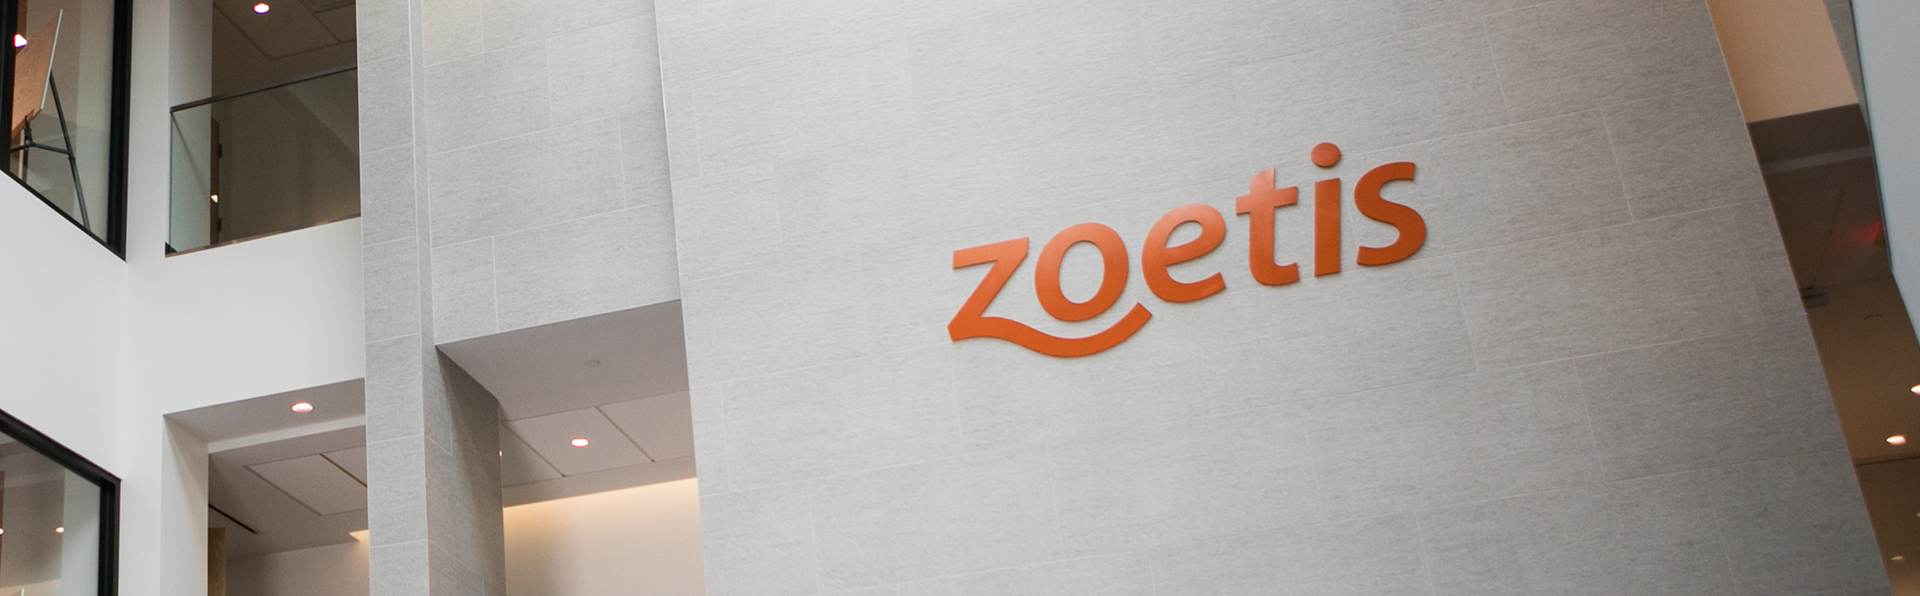 Zoetis logo in corporate office